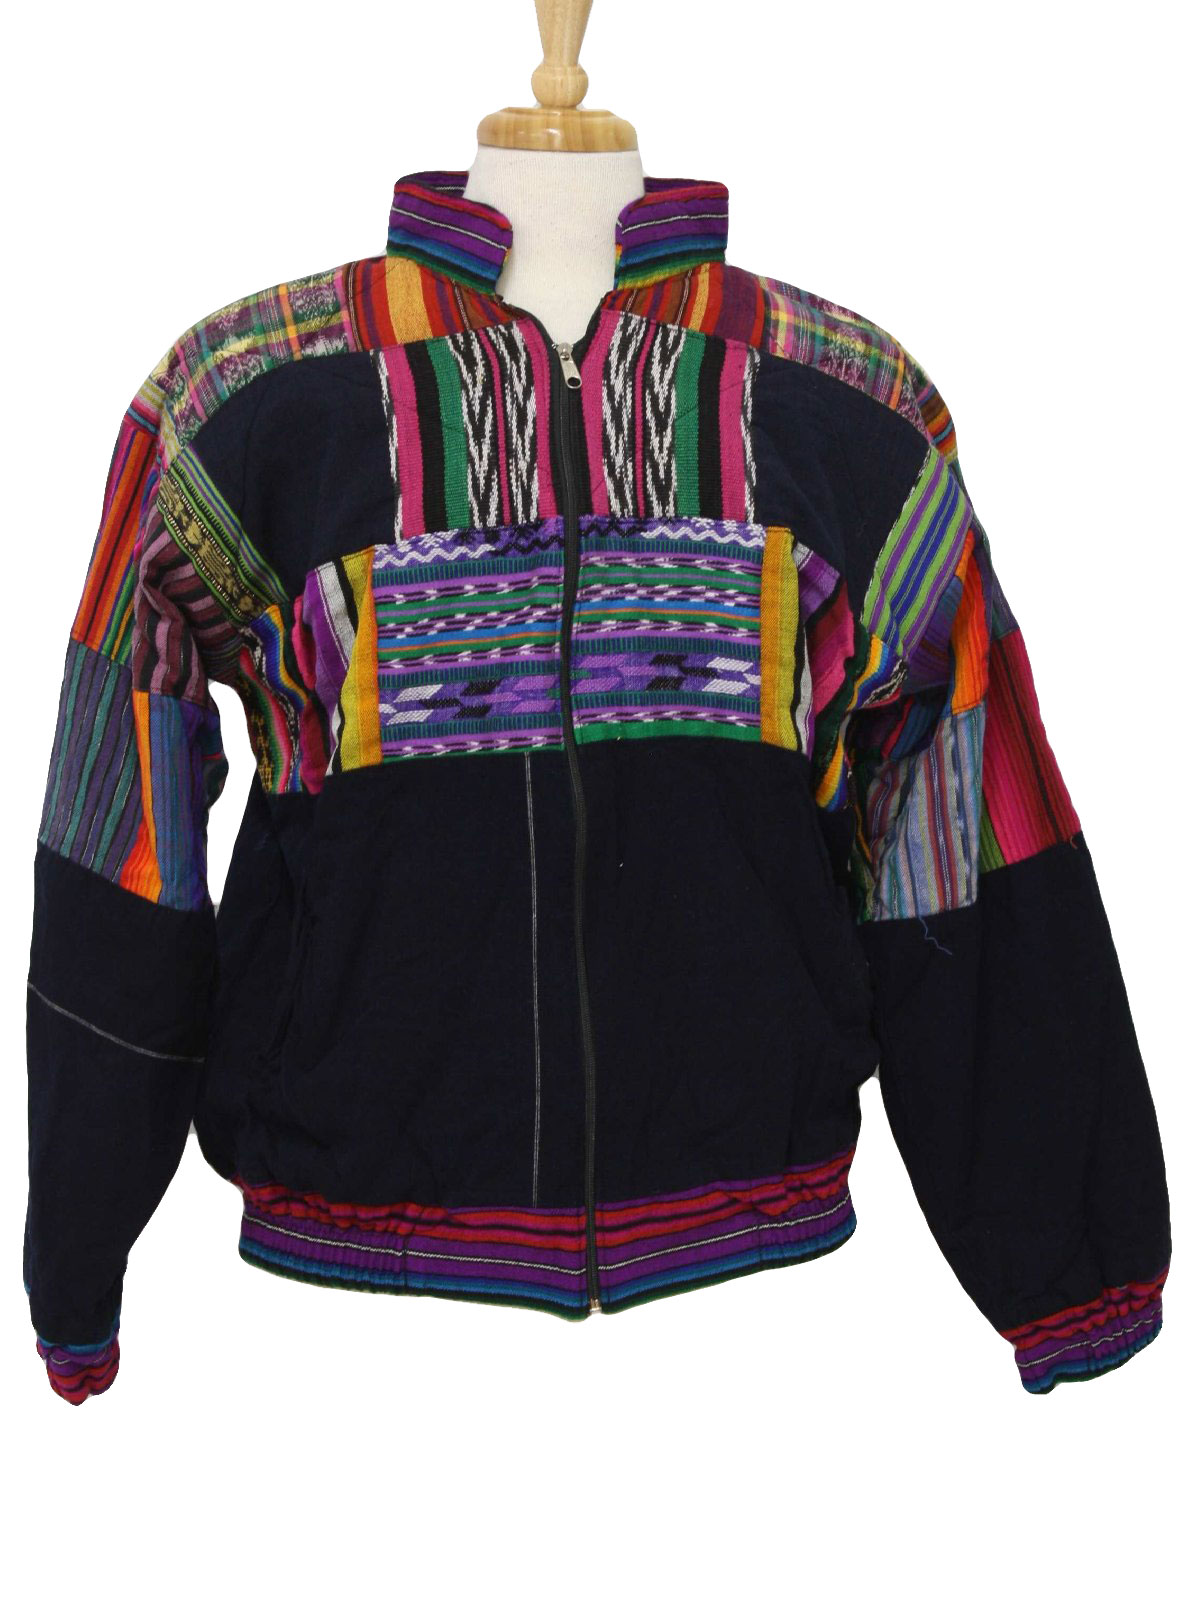 80's Jacket: 80s -no label- Unisex black and multi color woven cotton